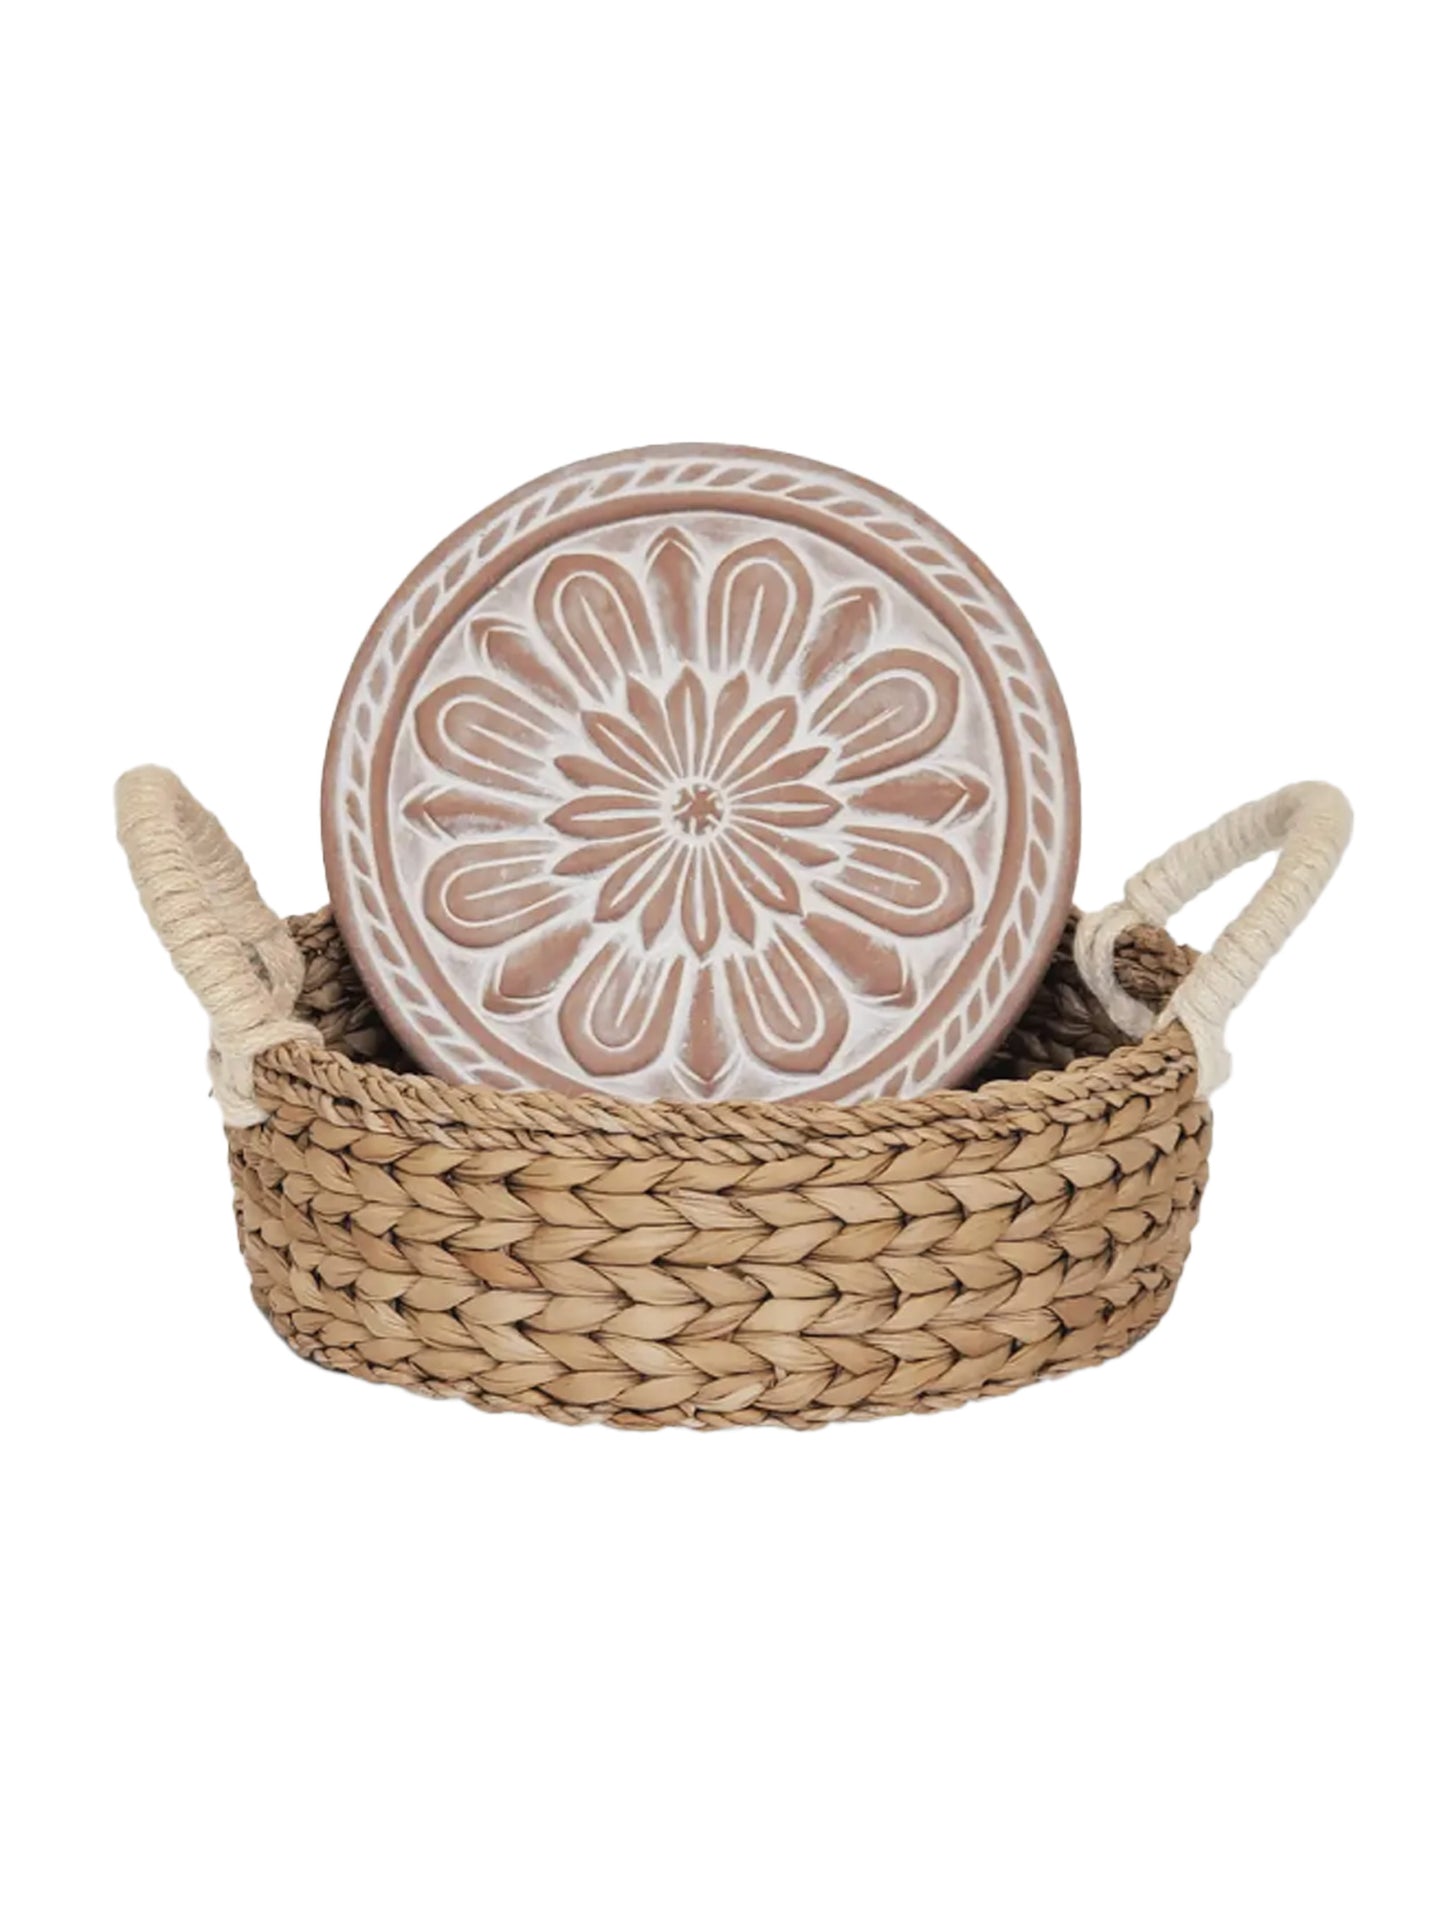 Bread-Warmer-and-Wicker-Basket-Vintage-Round-Flower-Weston-Table